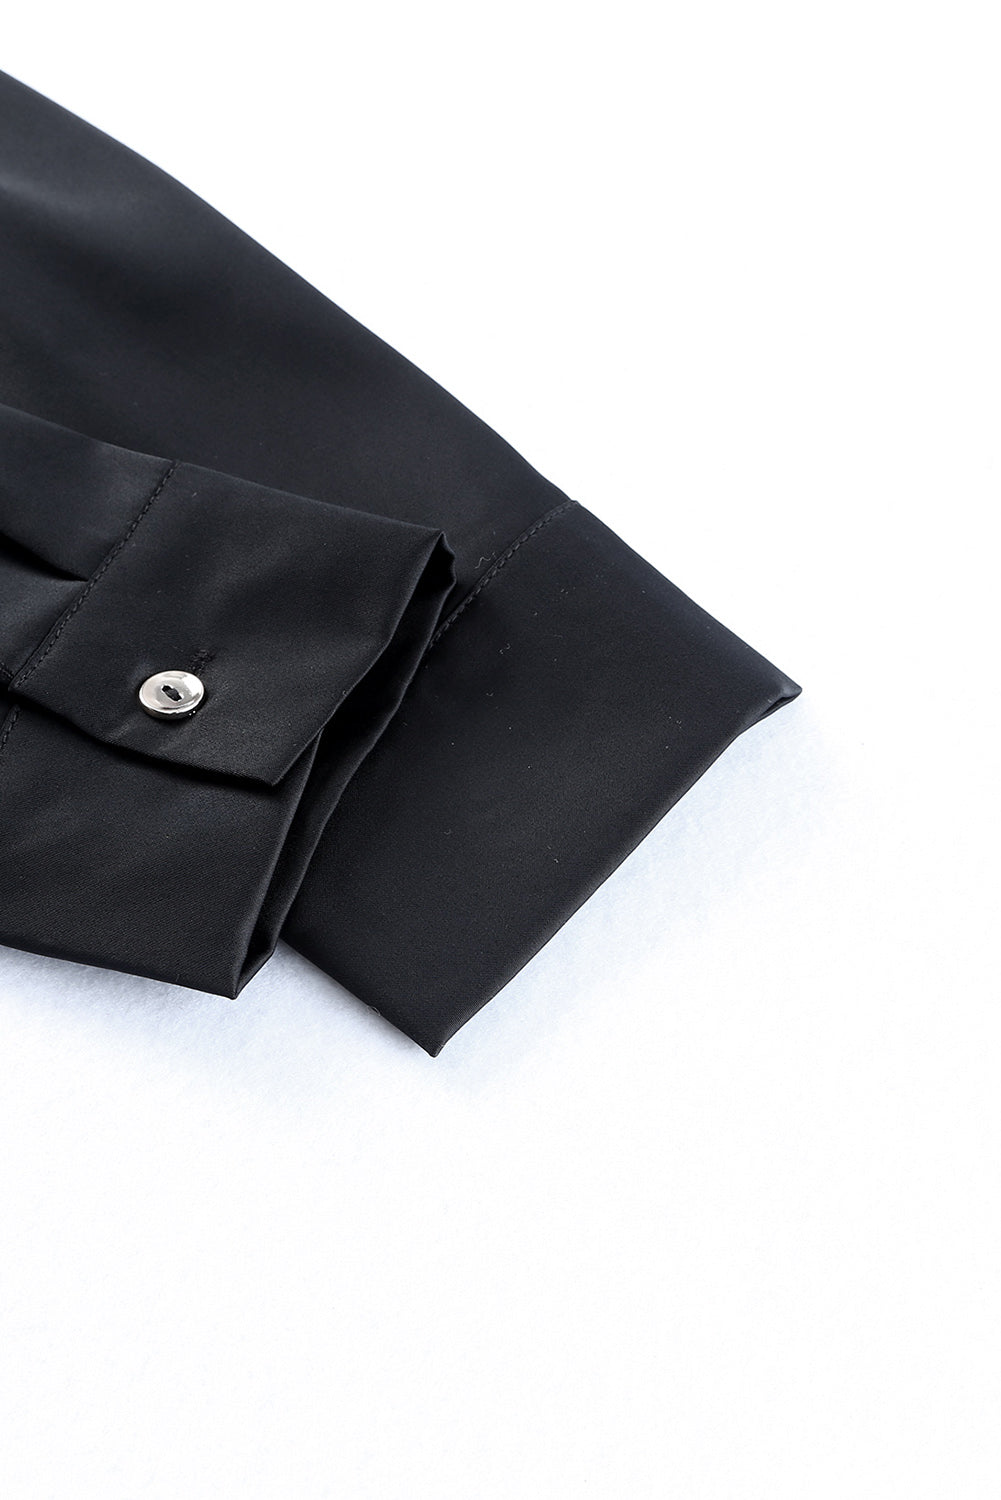 Black Sequin Splicing Pocket Buttoned Shirt Dress